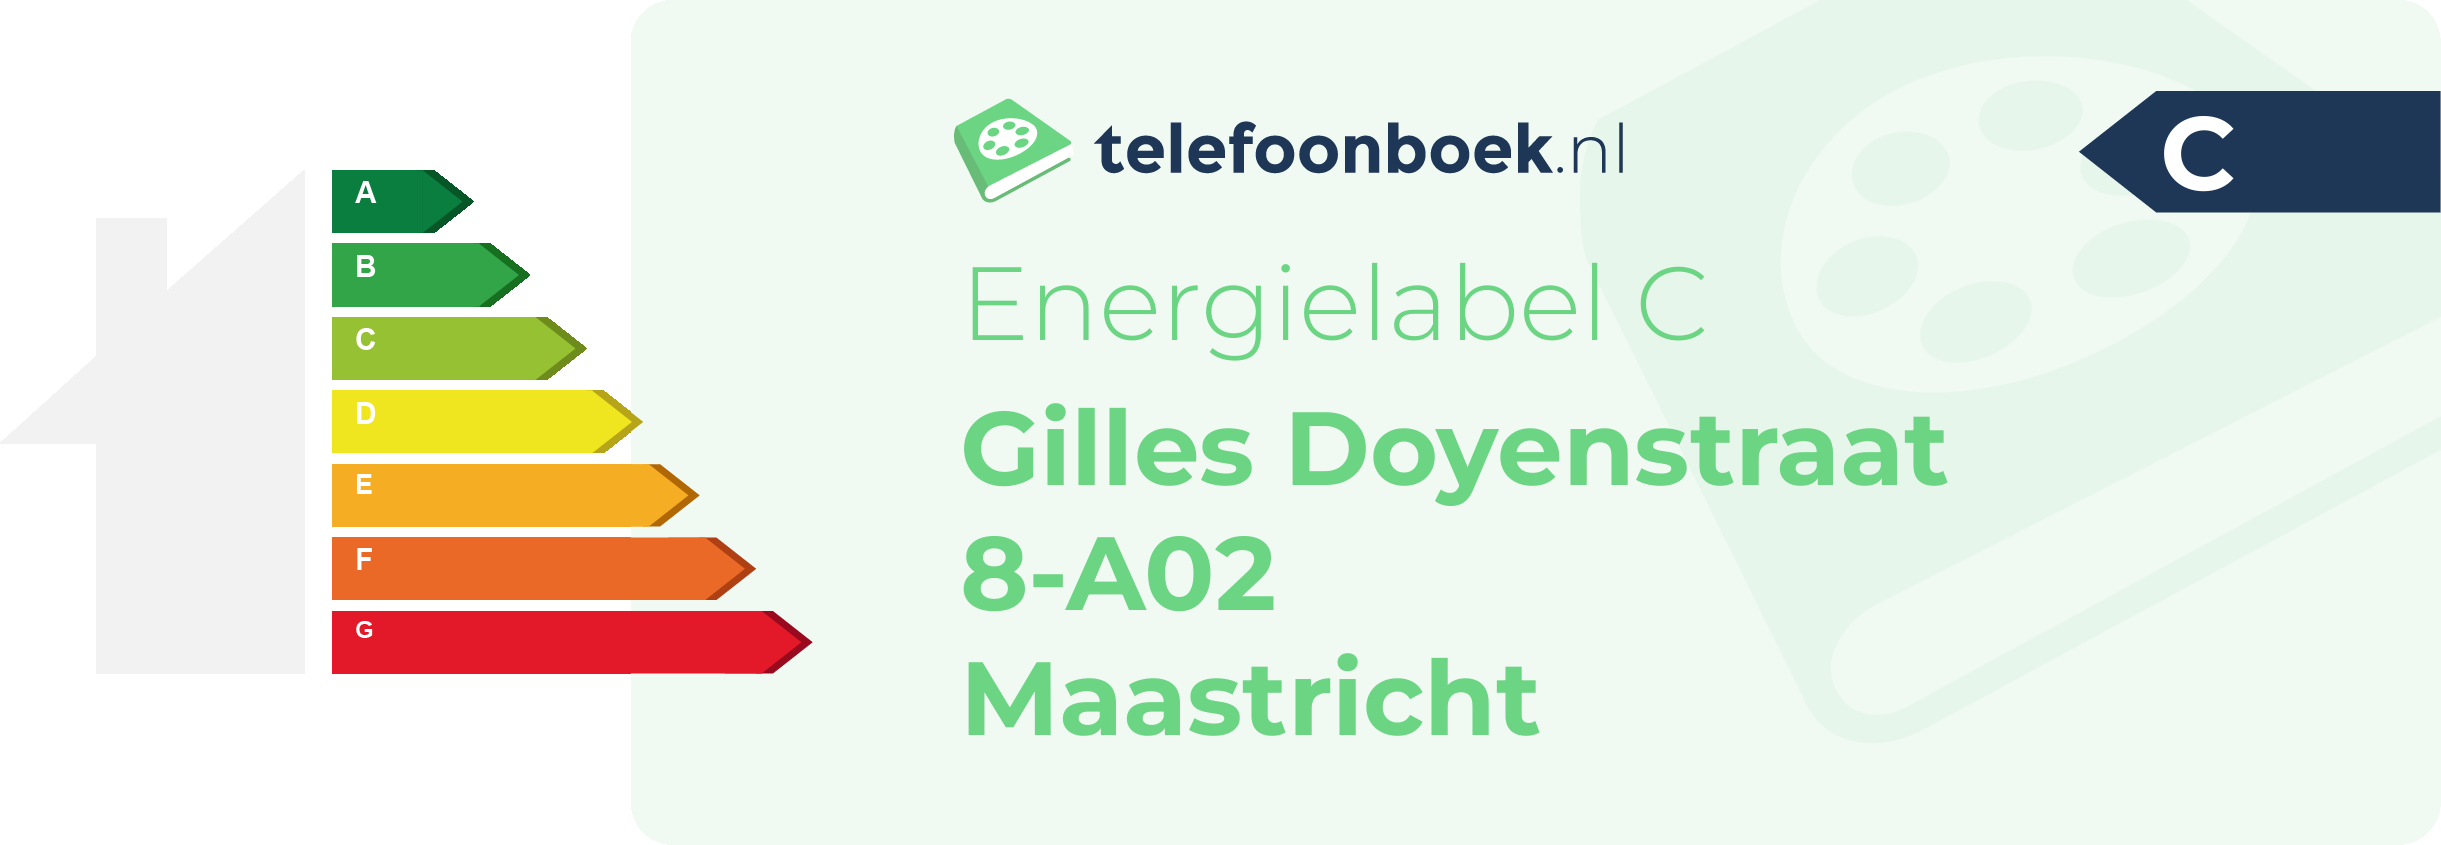 Energielabel Gilles Doyenstraat 8-A02 Maastricht